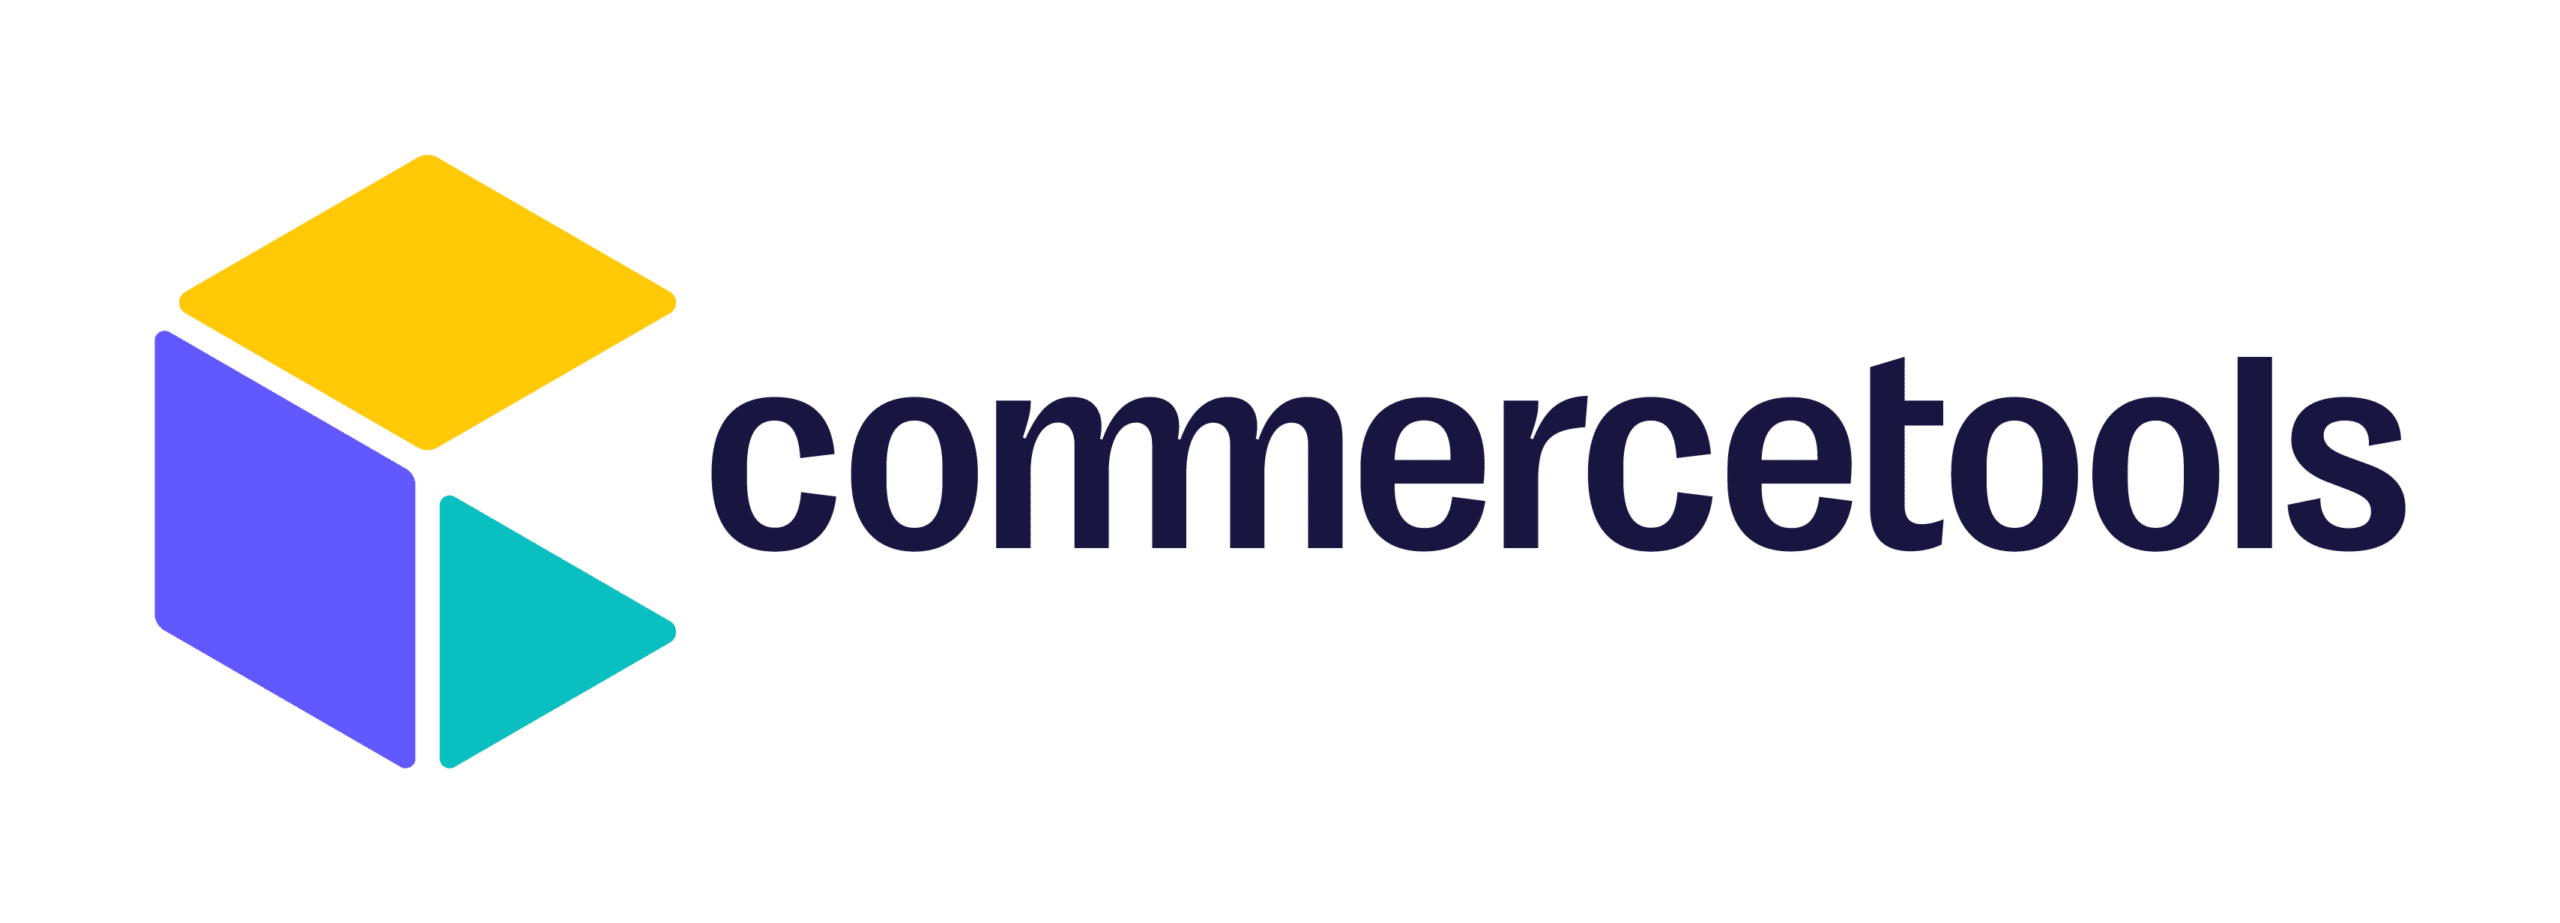 commercetools logo new